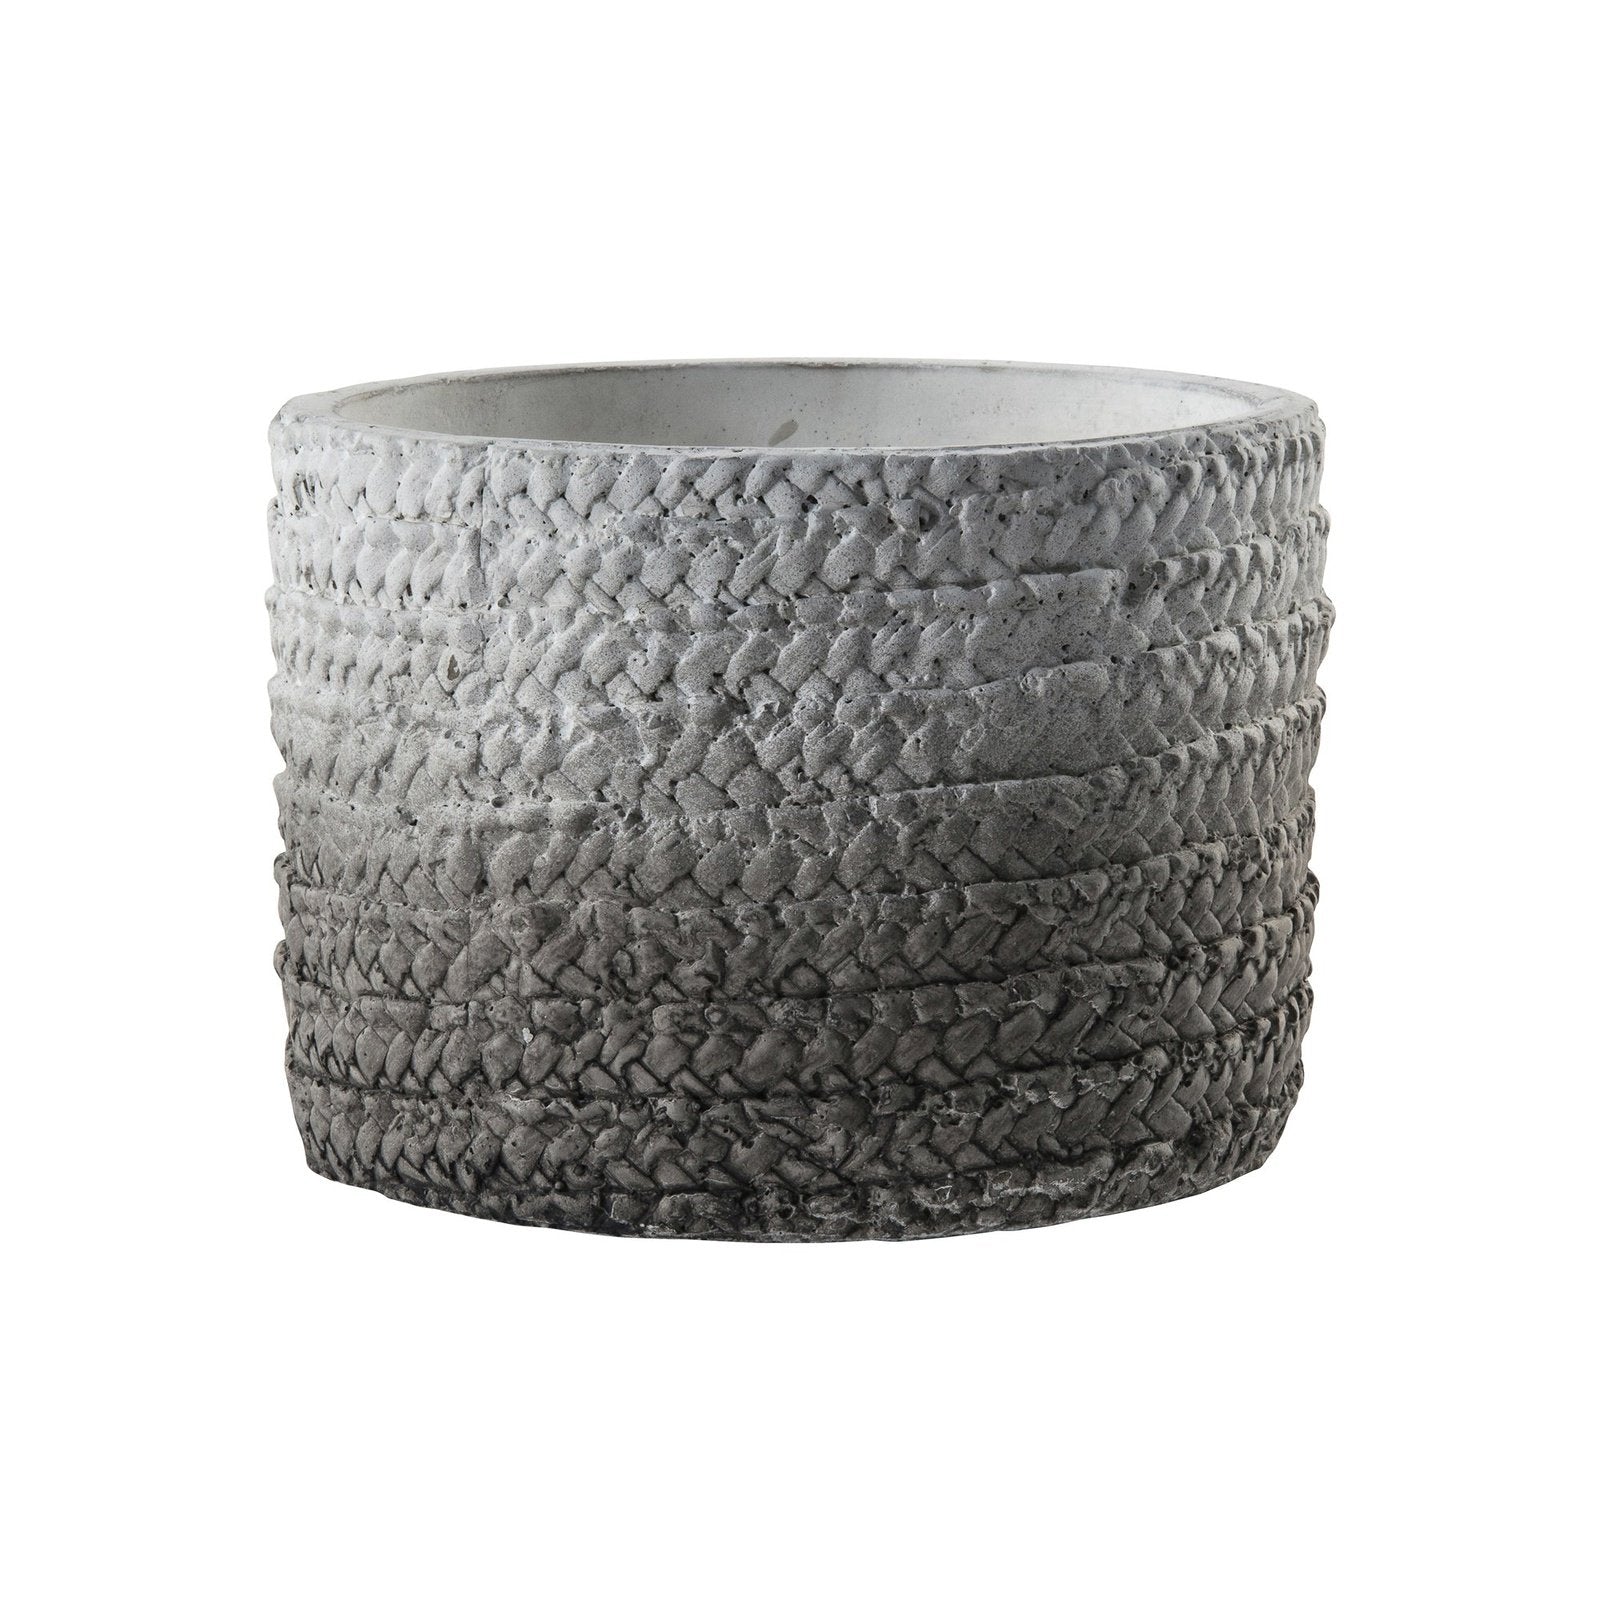 Bako Textured Cement Pot - Grey Ombre Effect